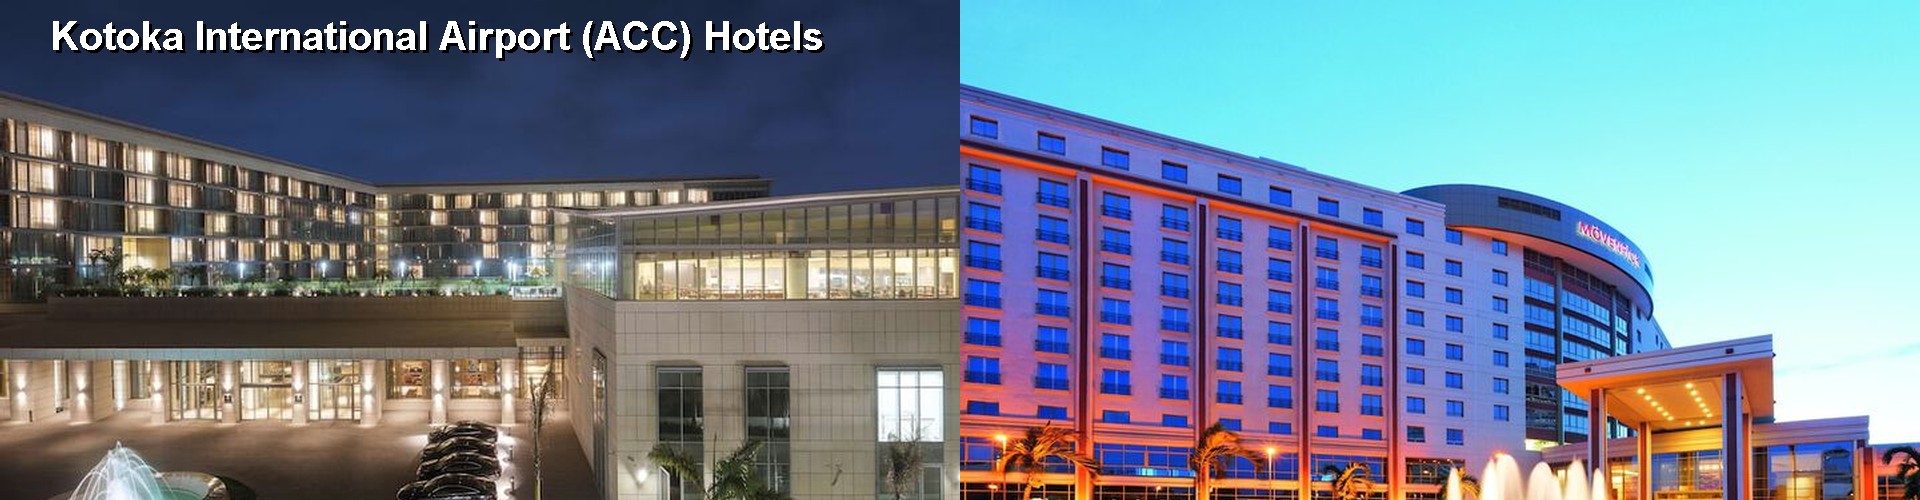 4 Best Hotels near Kotoka International Airport (ACC)